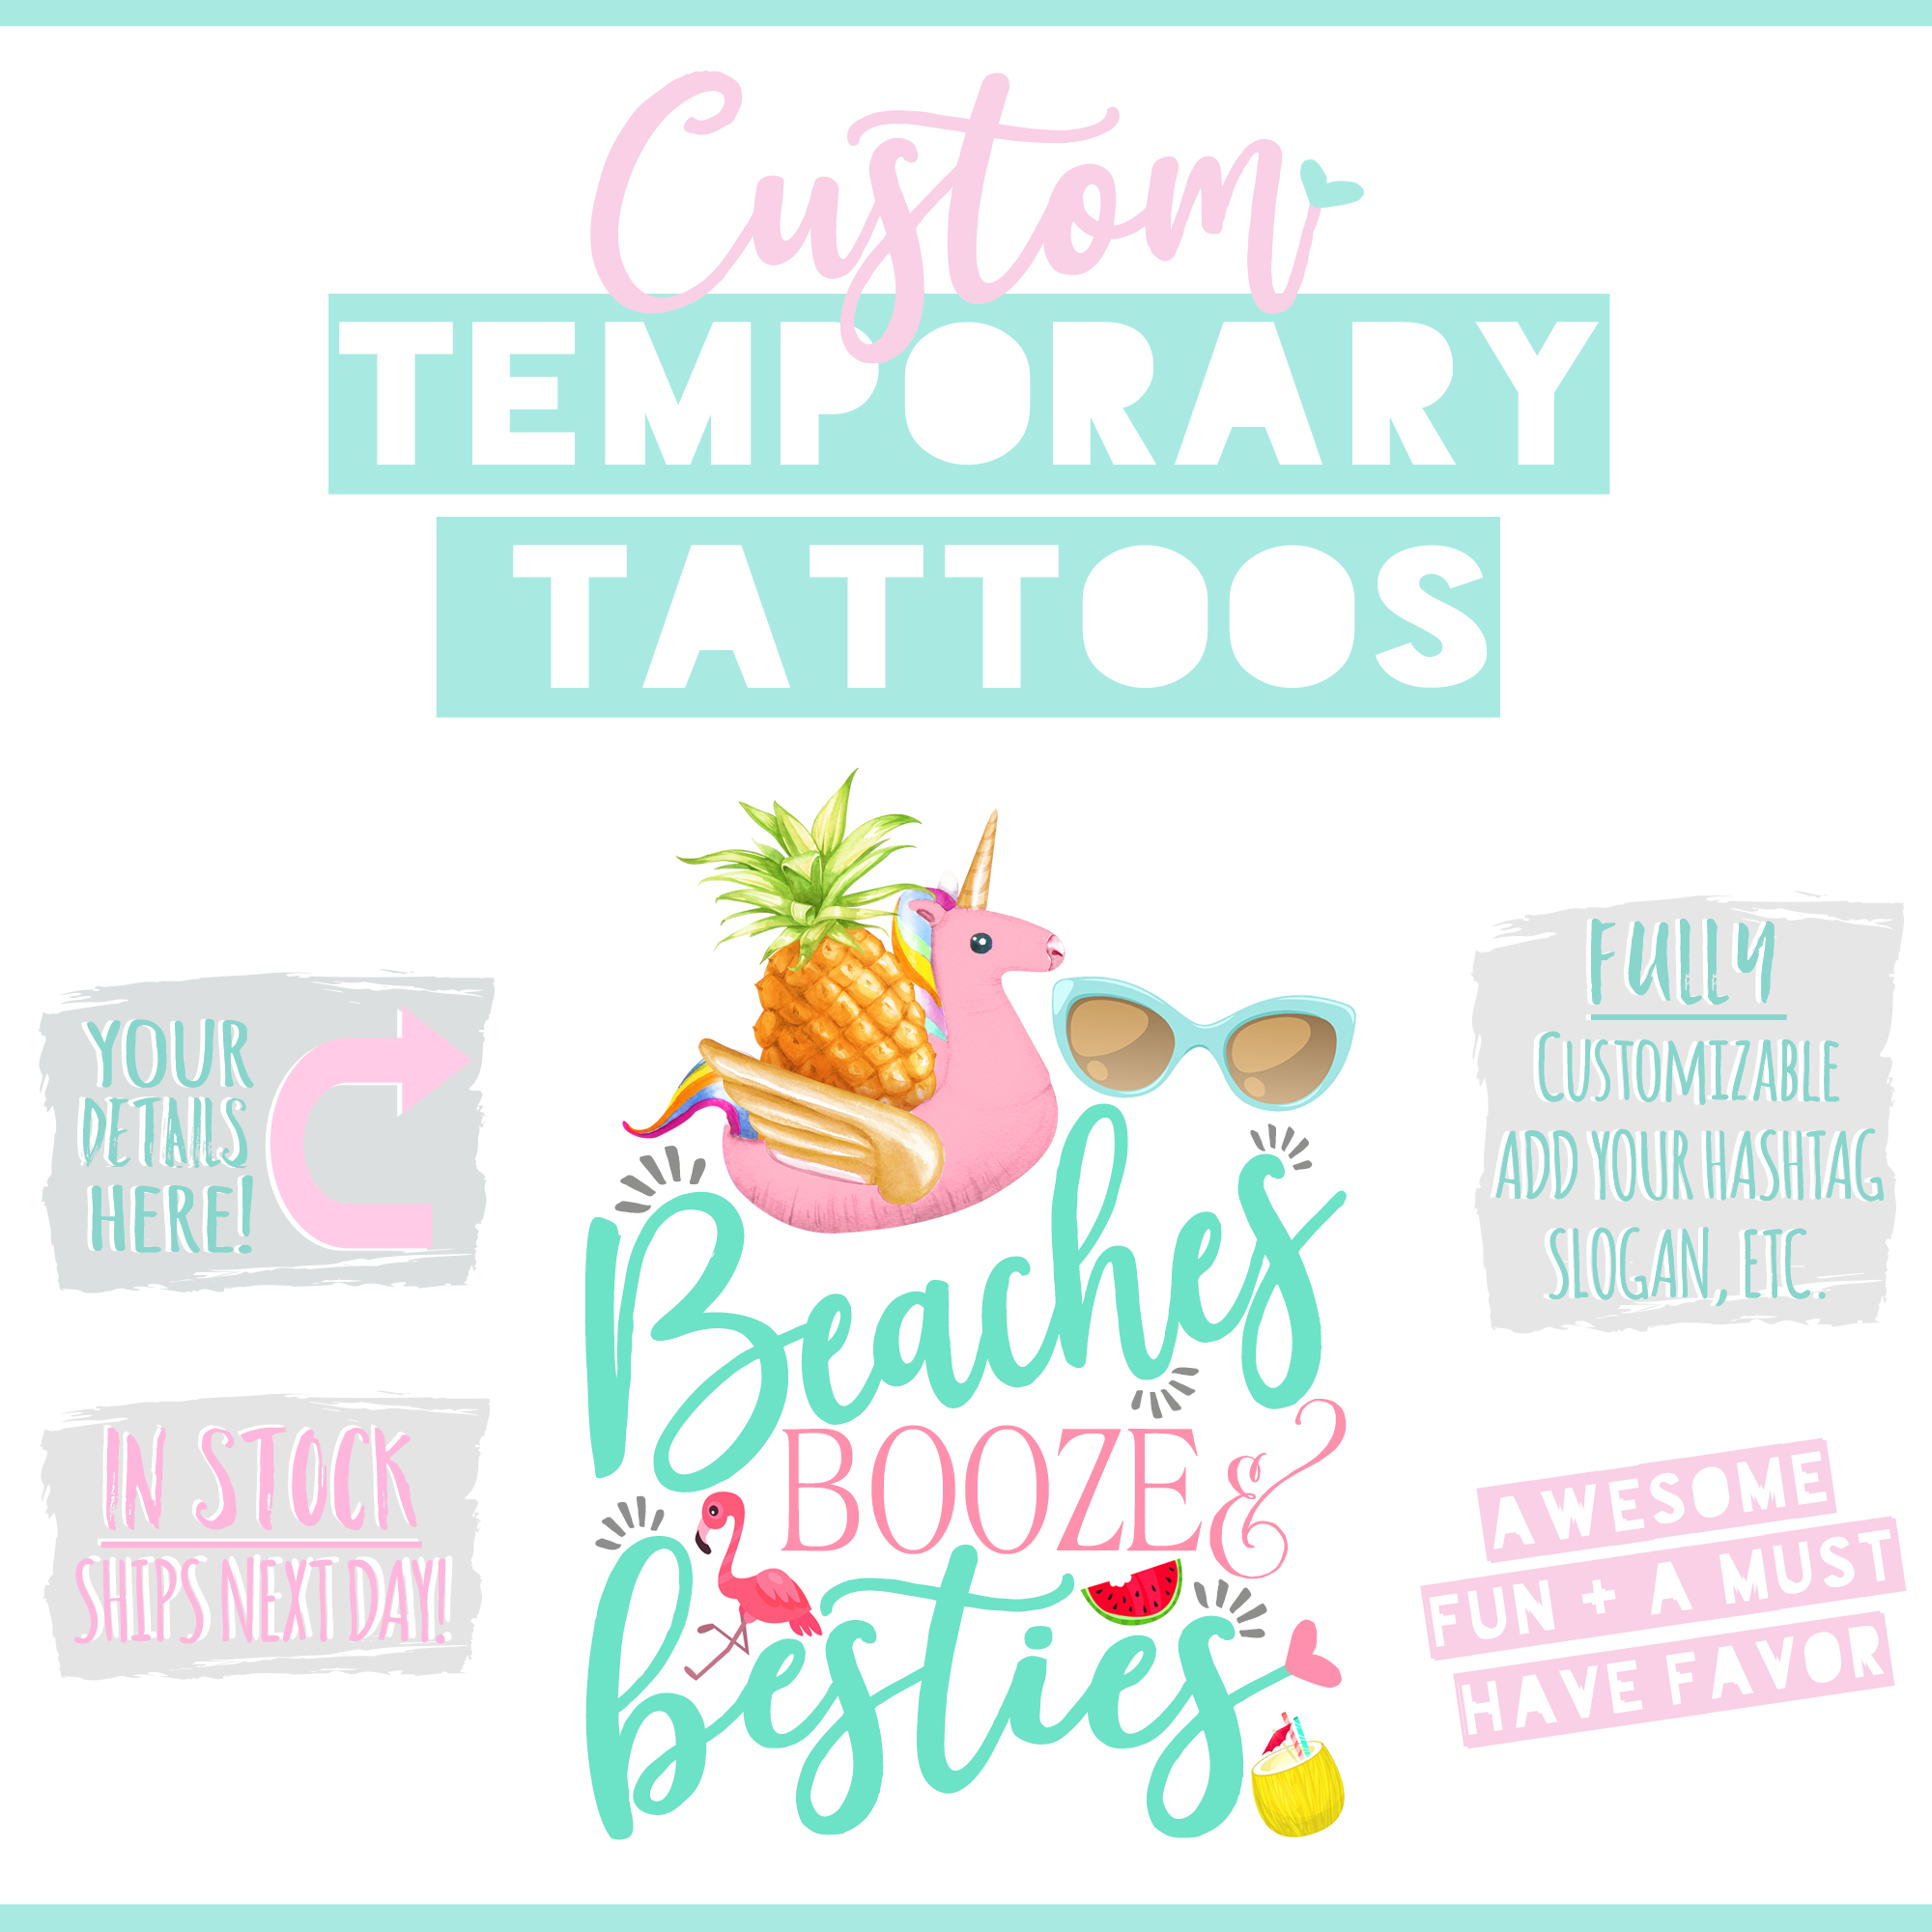 Custom Temporary Tattoo Bachelorette Party Favors | Beaches Booze & Besties